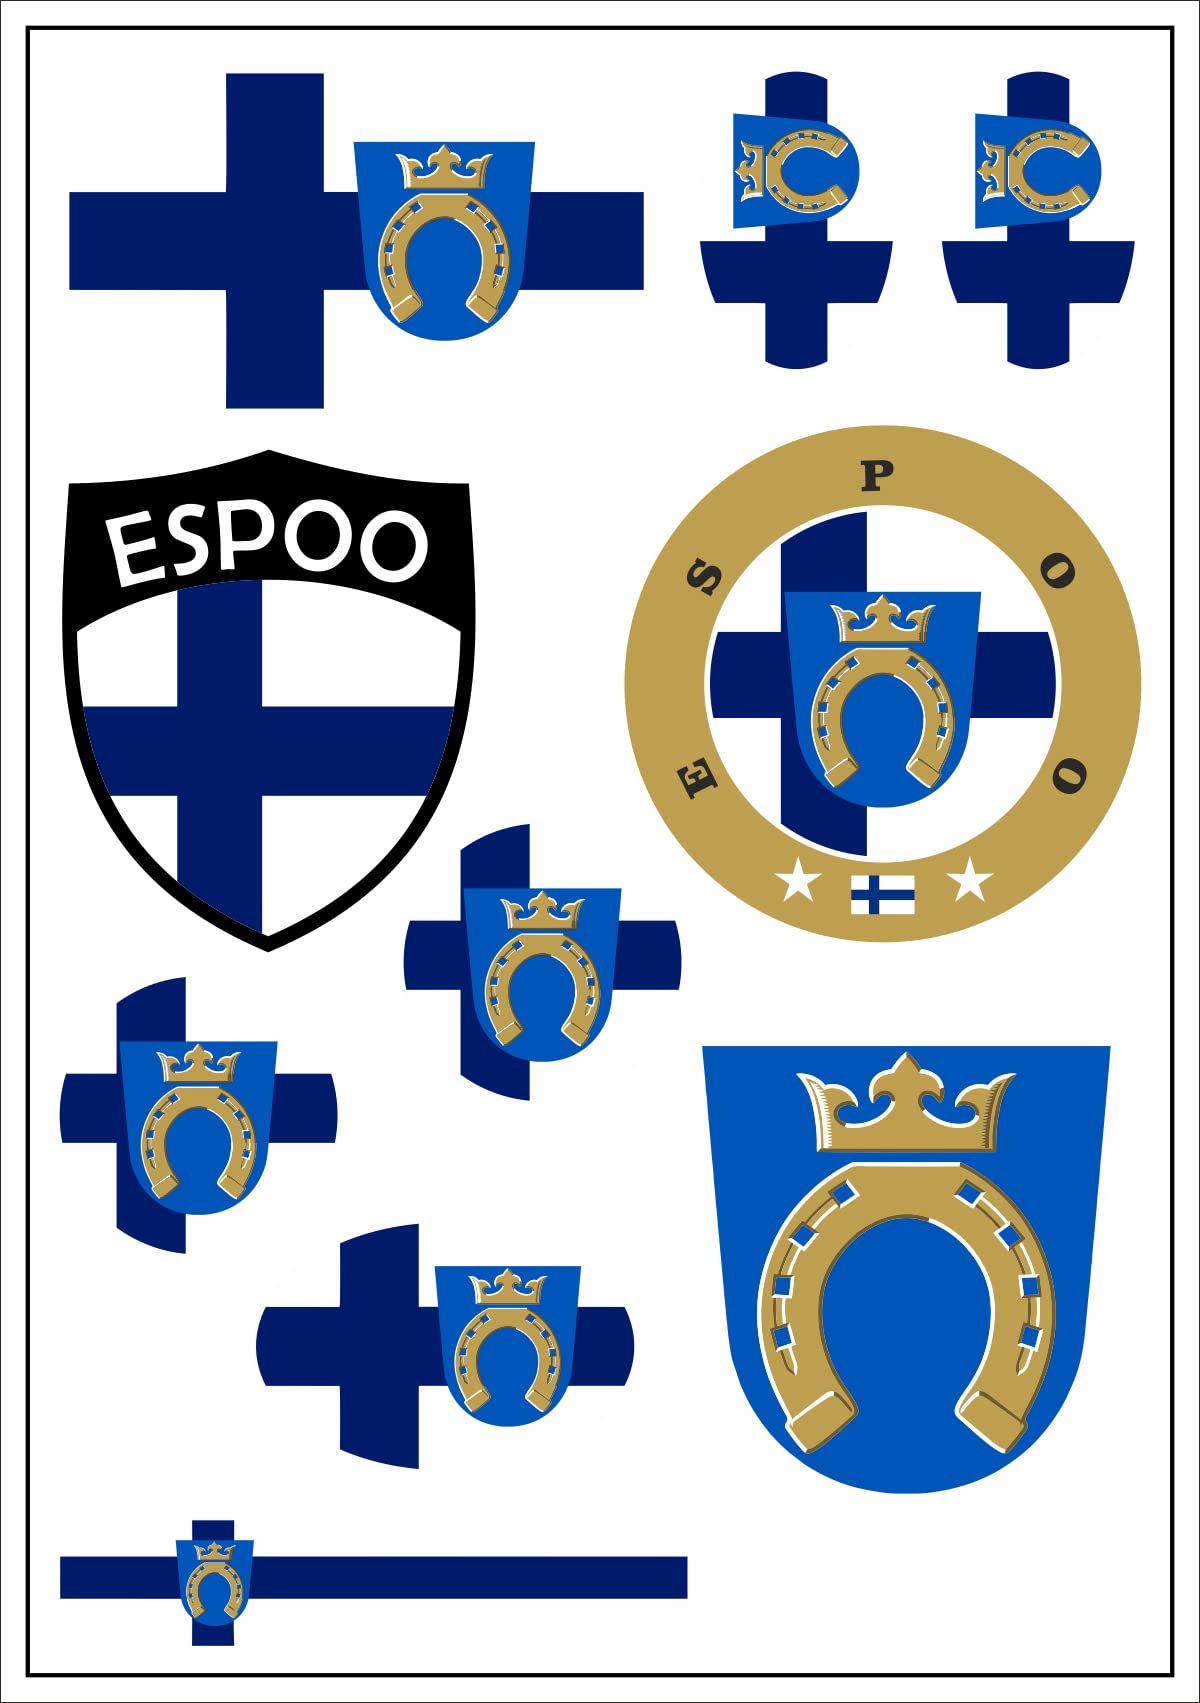 aprom Espoo Finnland Aufkleber Karte Sticker-Bogen - PKW Auto Fahne Flagge Decal 17x24 cm - Viele Motive von aprom